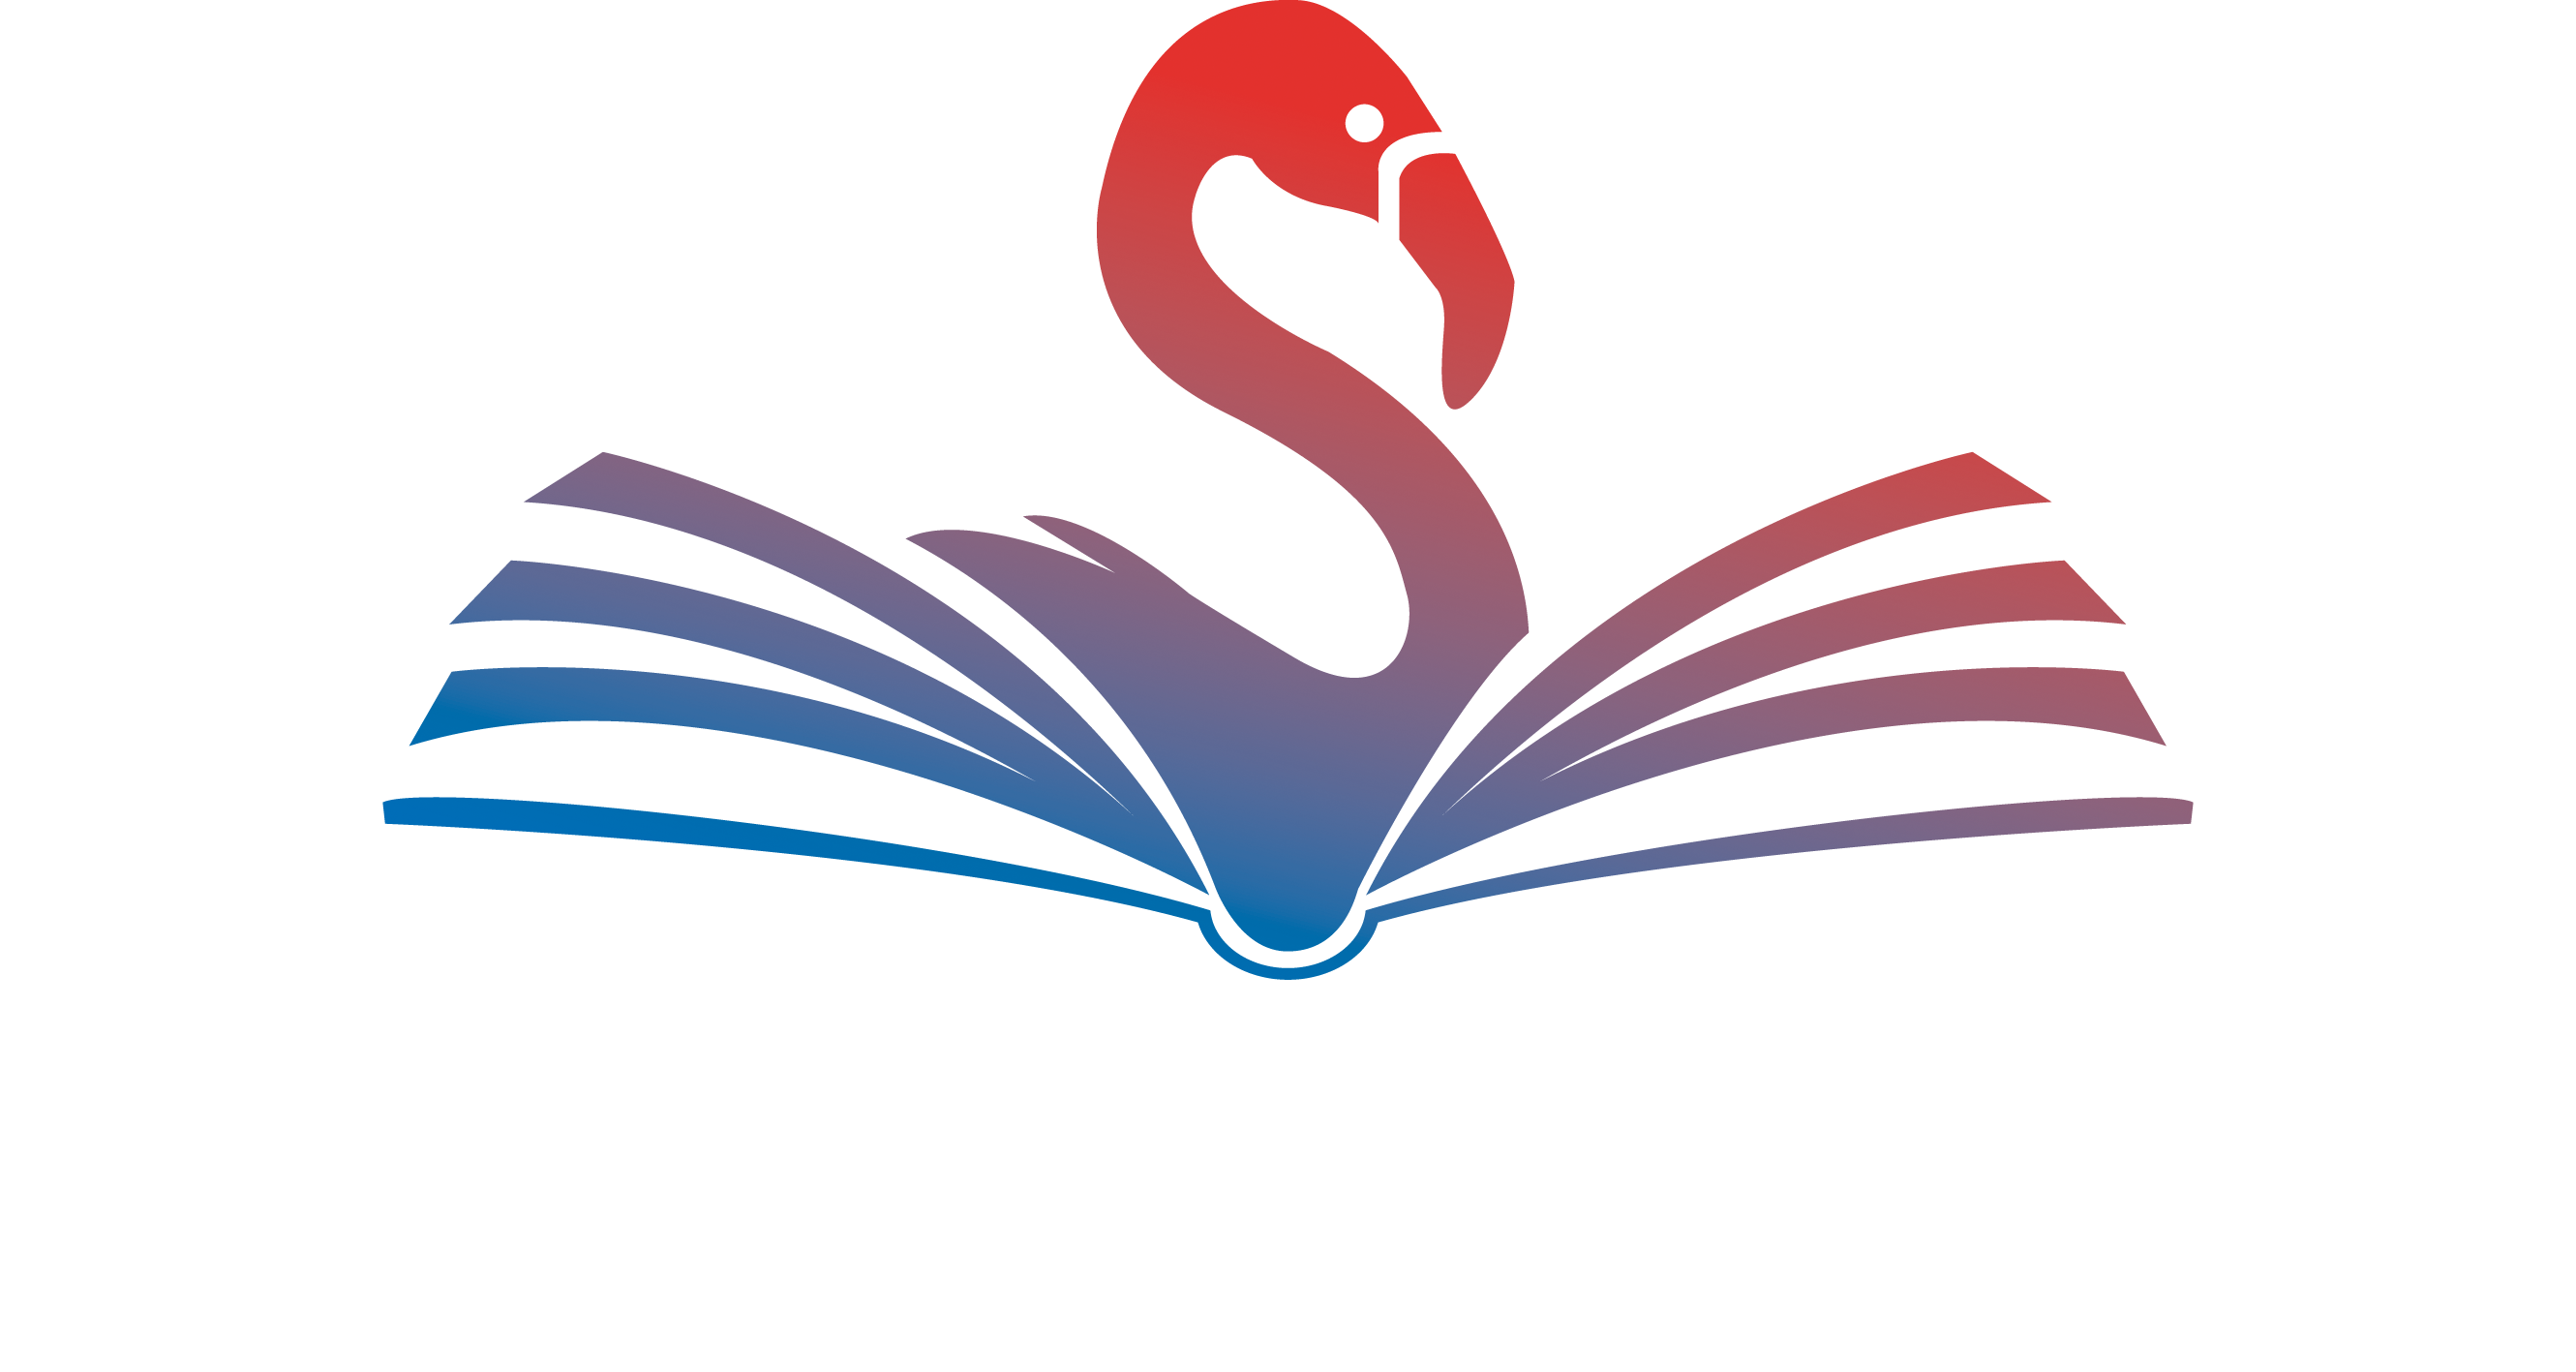 Flamingo Edizioni